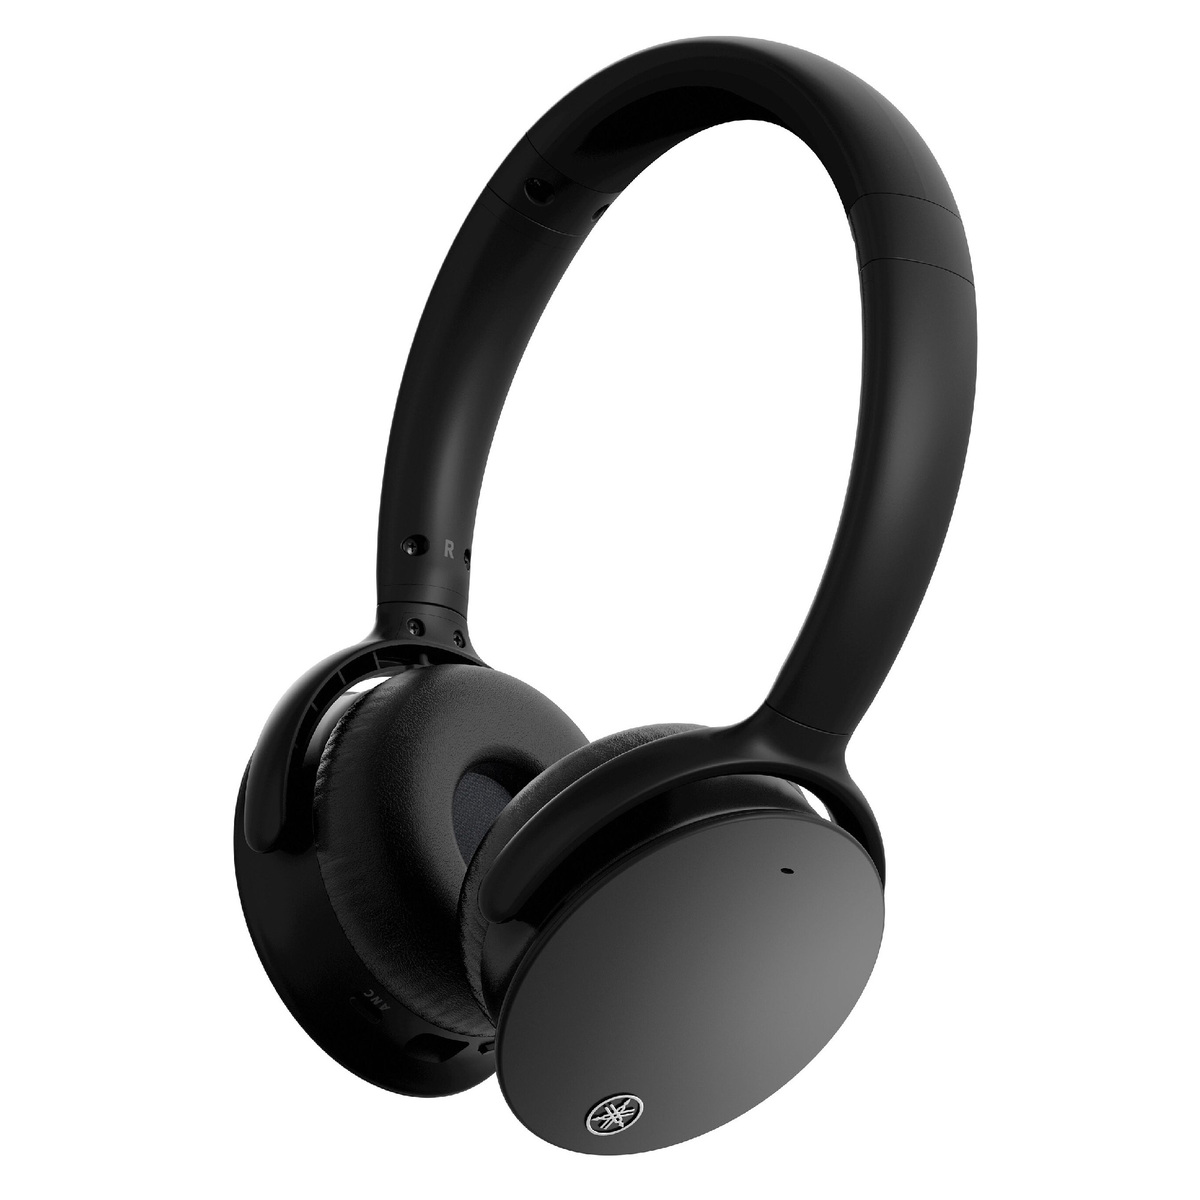 Yamaha Wireless Noise Cancelling On-ear Headphone , Black, YH-E500A